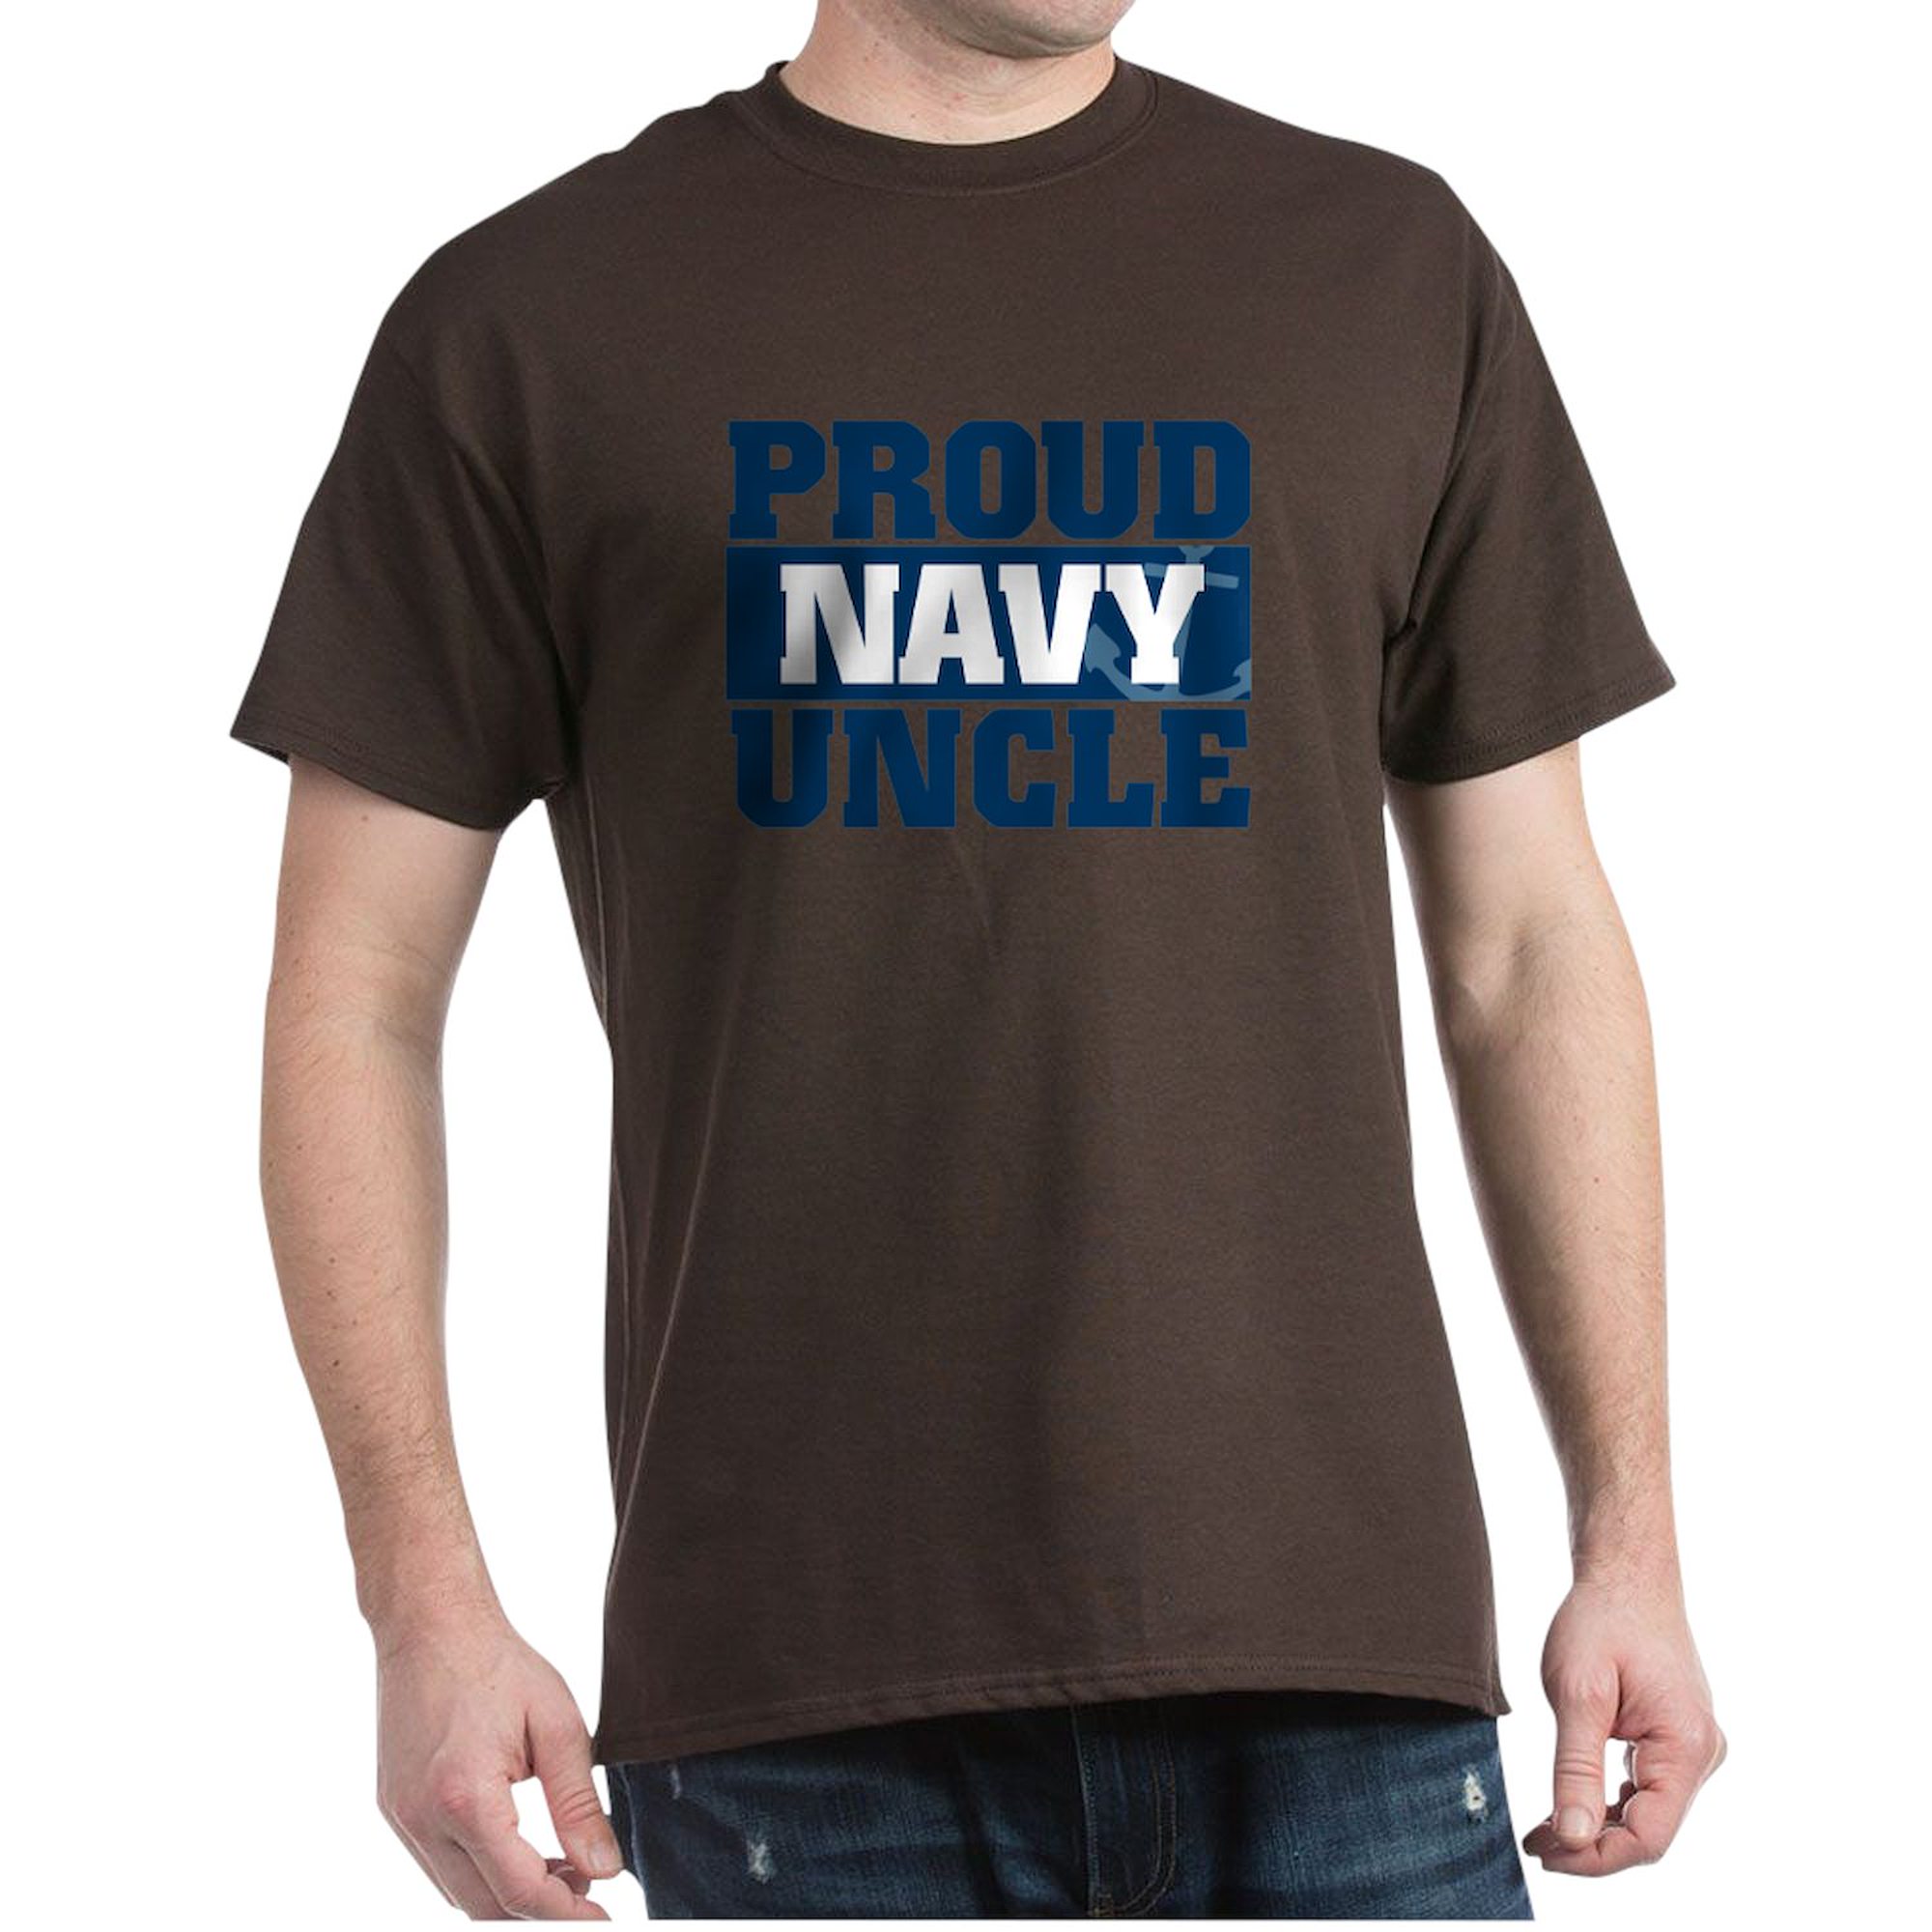 CafePress - US Navy Proud Navy Uncle Dark T Shirt - 100% Cotton T-Shirt - image 1 of 4